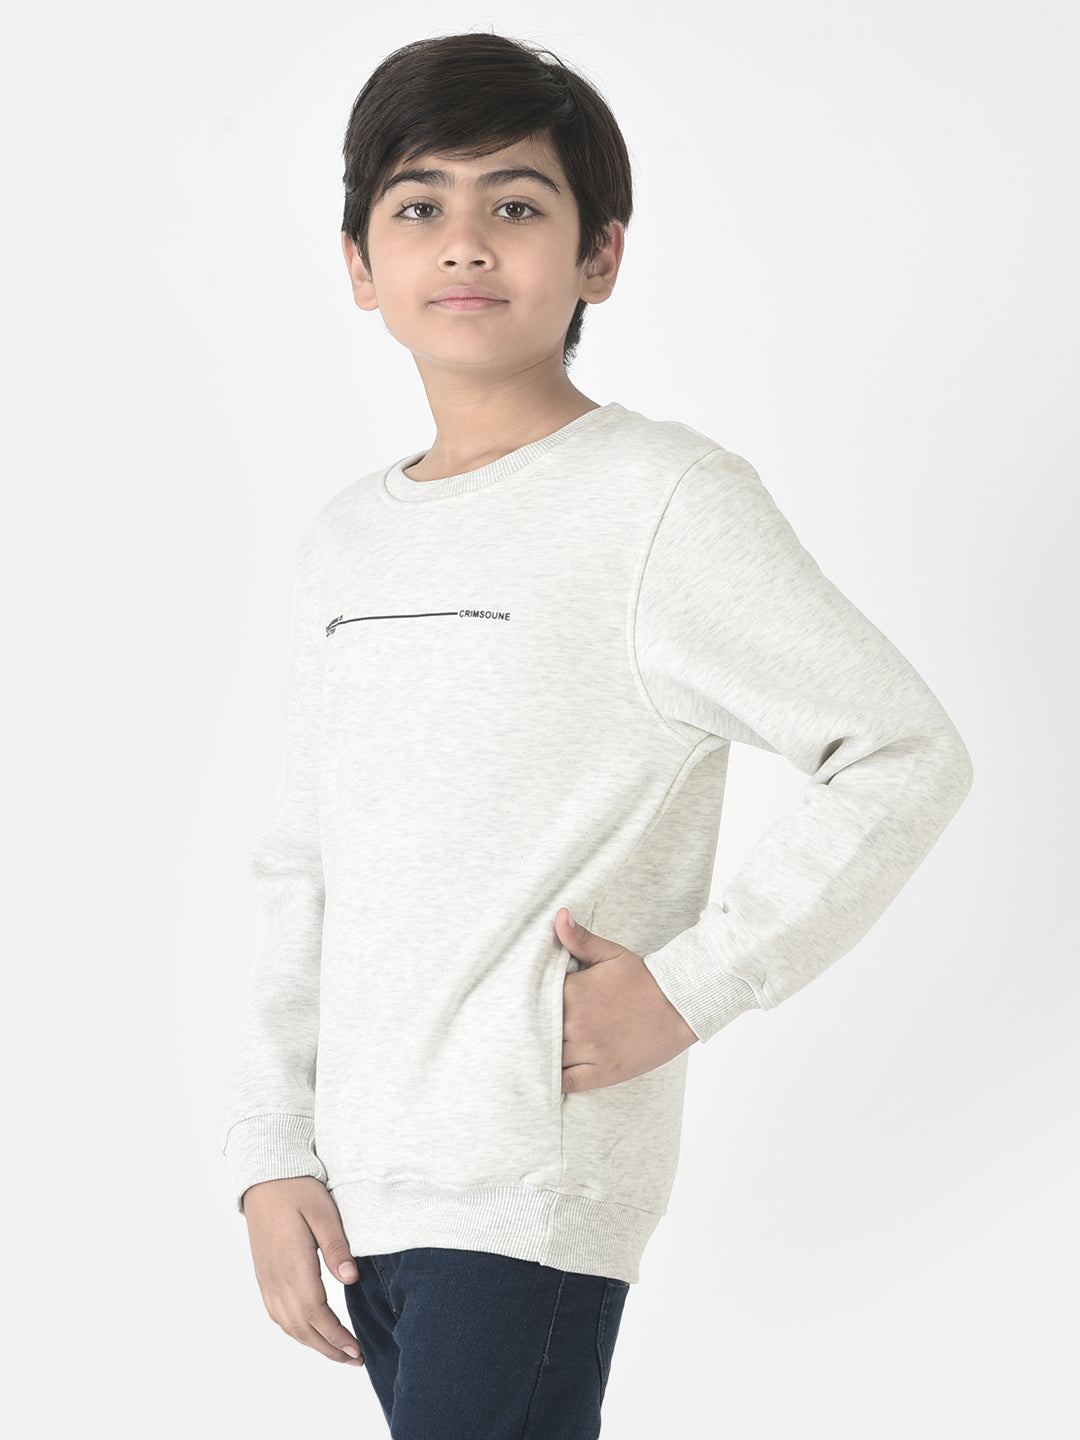  Minimalistic Light Grey Sweatshirt